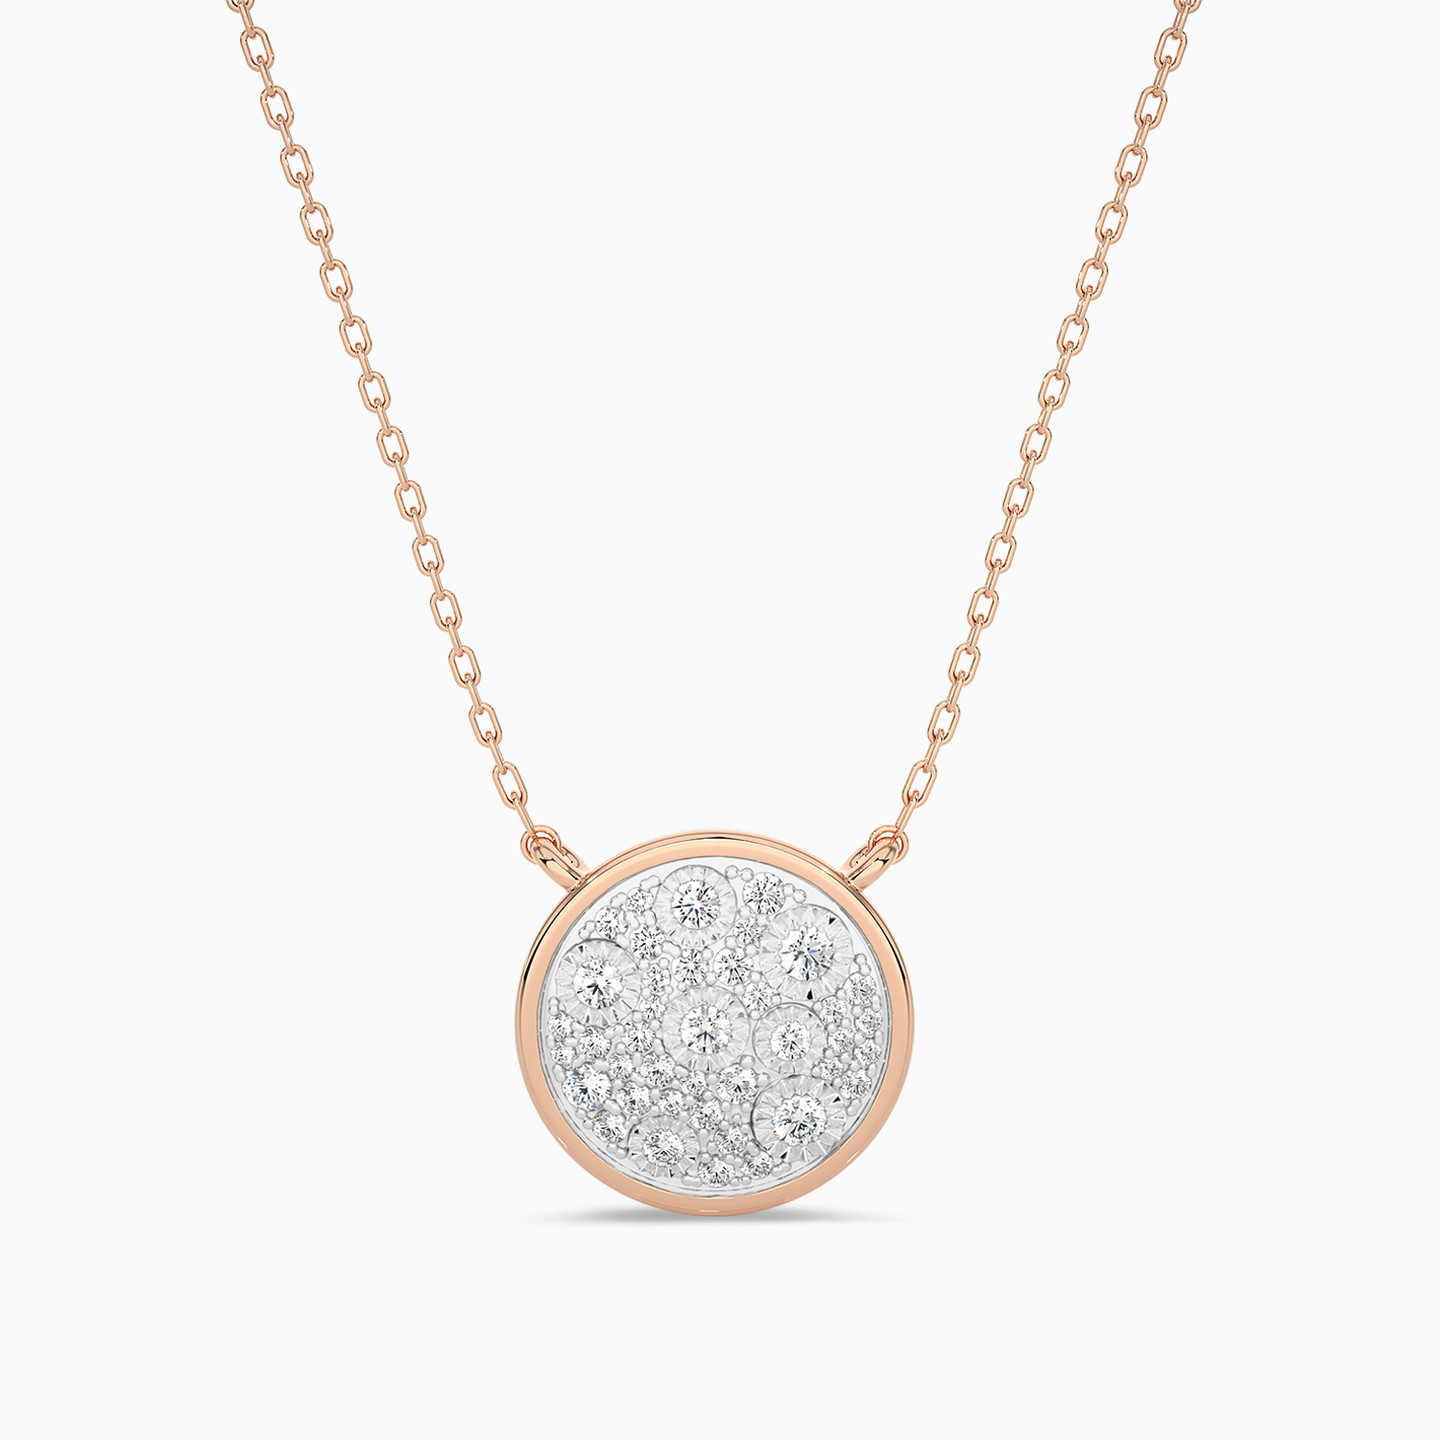 18K Gold Diamond Pendant Necklace - 3